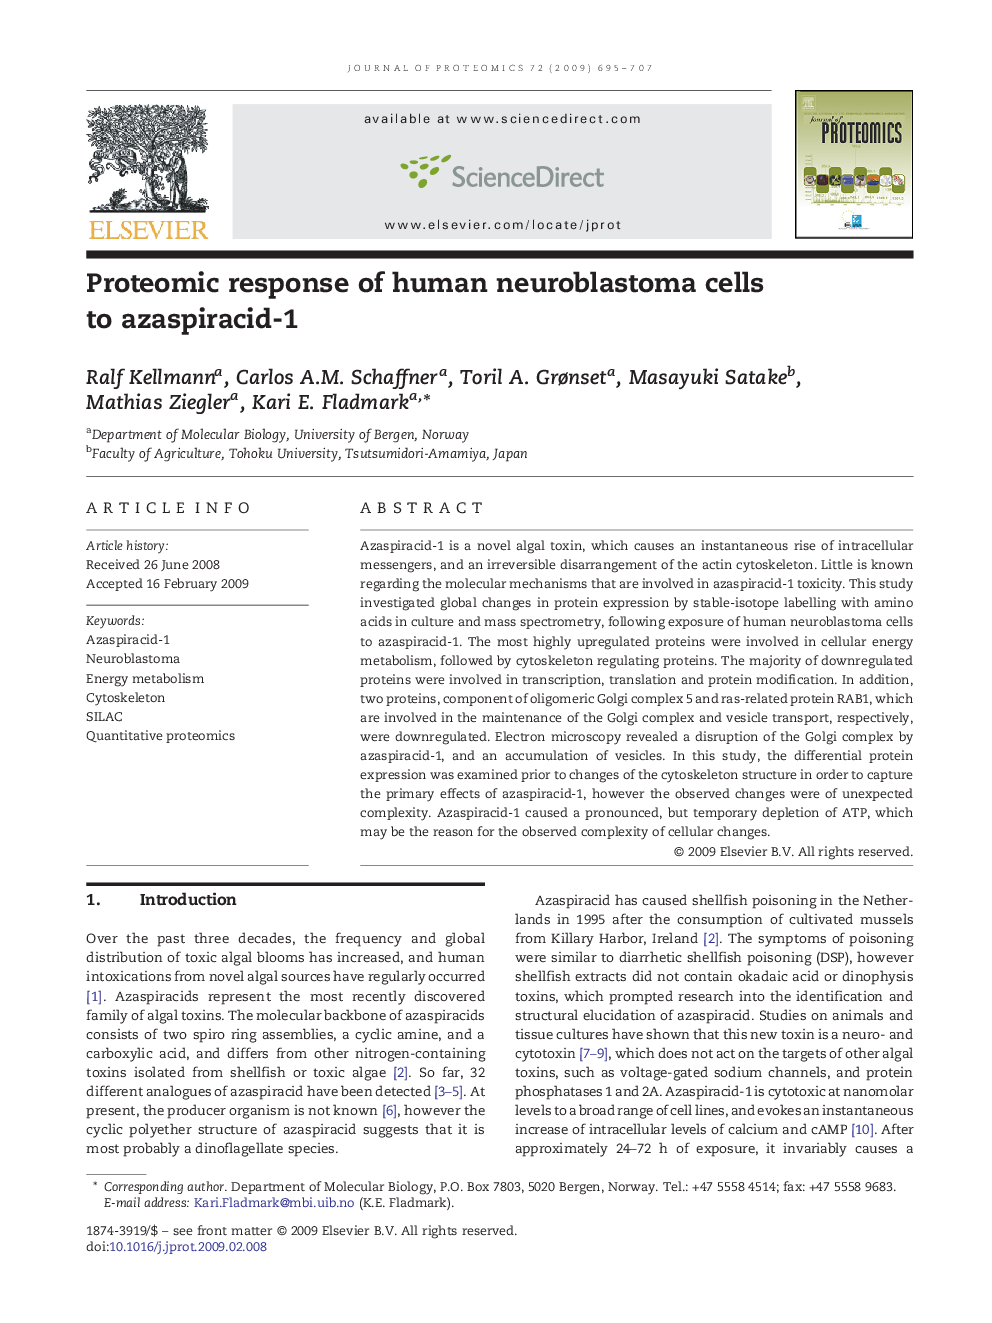 Proteomic response of human neuroblastoma cells to azaspiracid-1